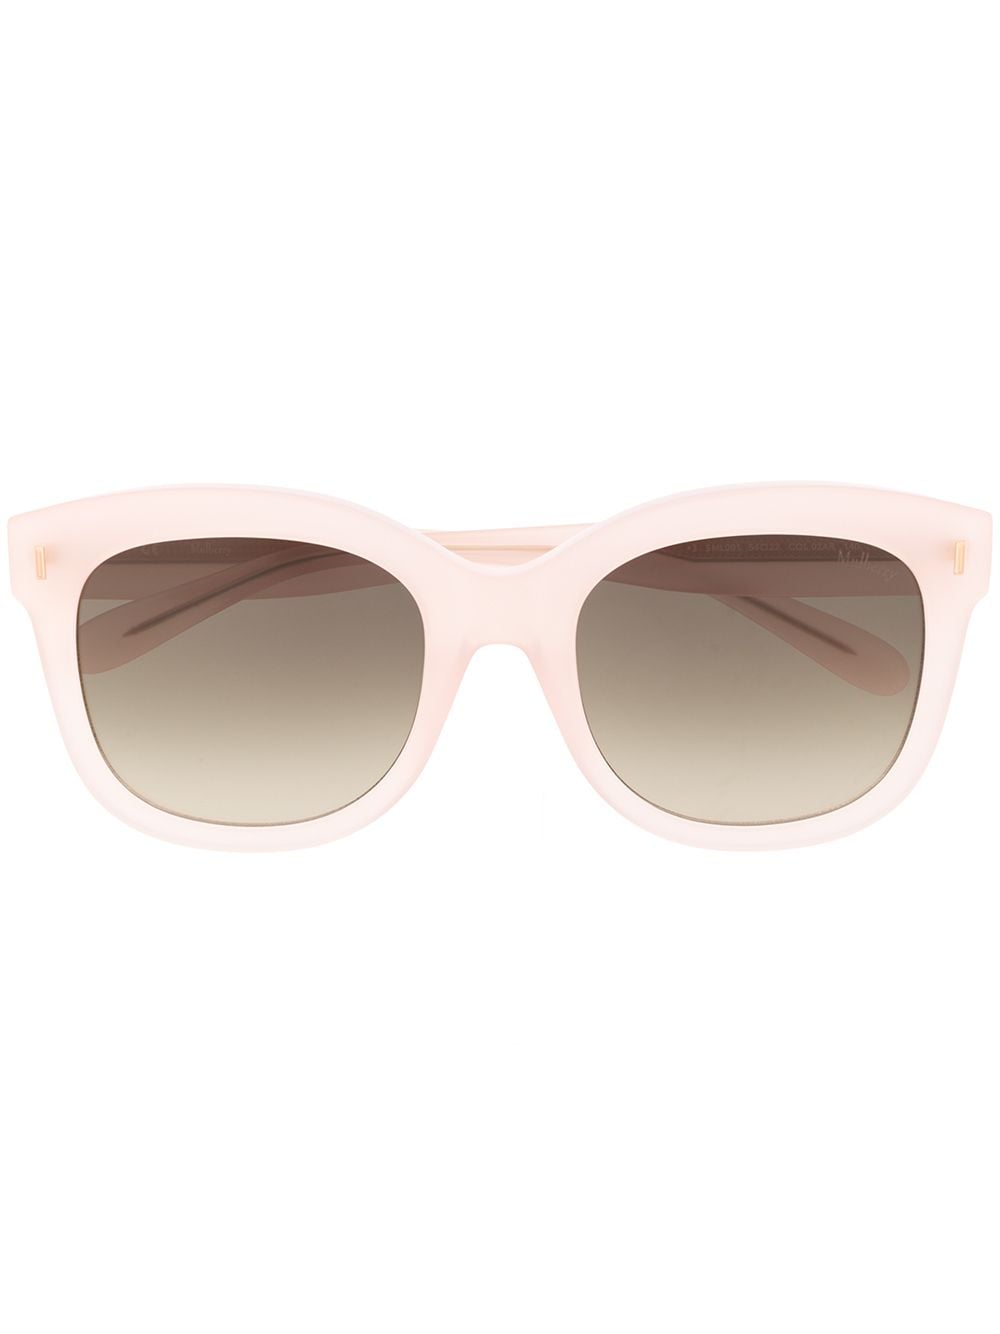 фото Mulberry солнцезащитные очки charlotte в квадратной оправе